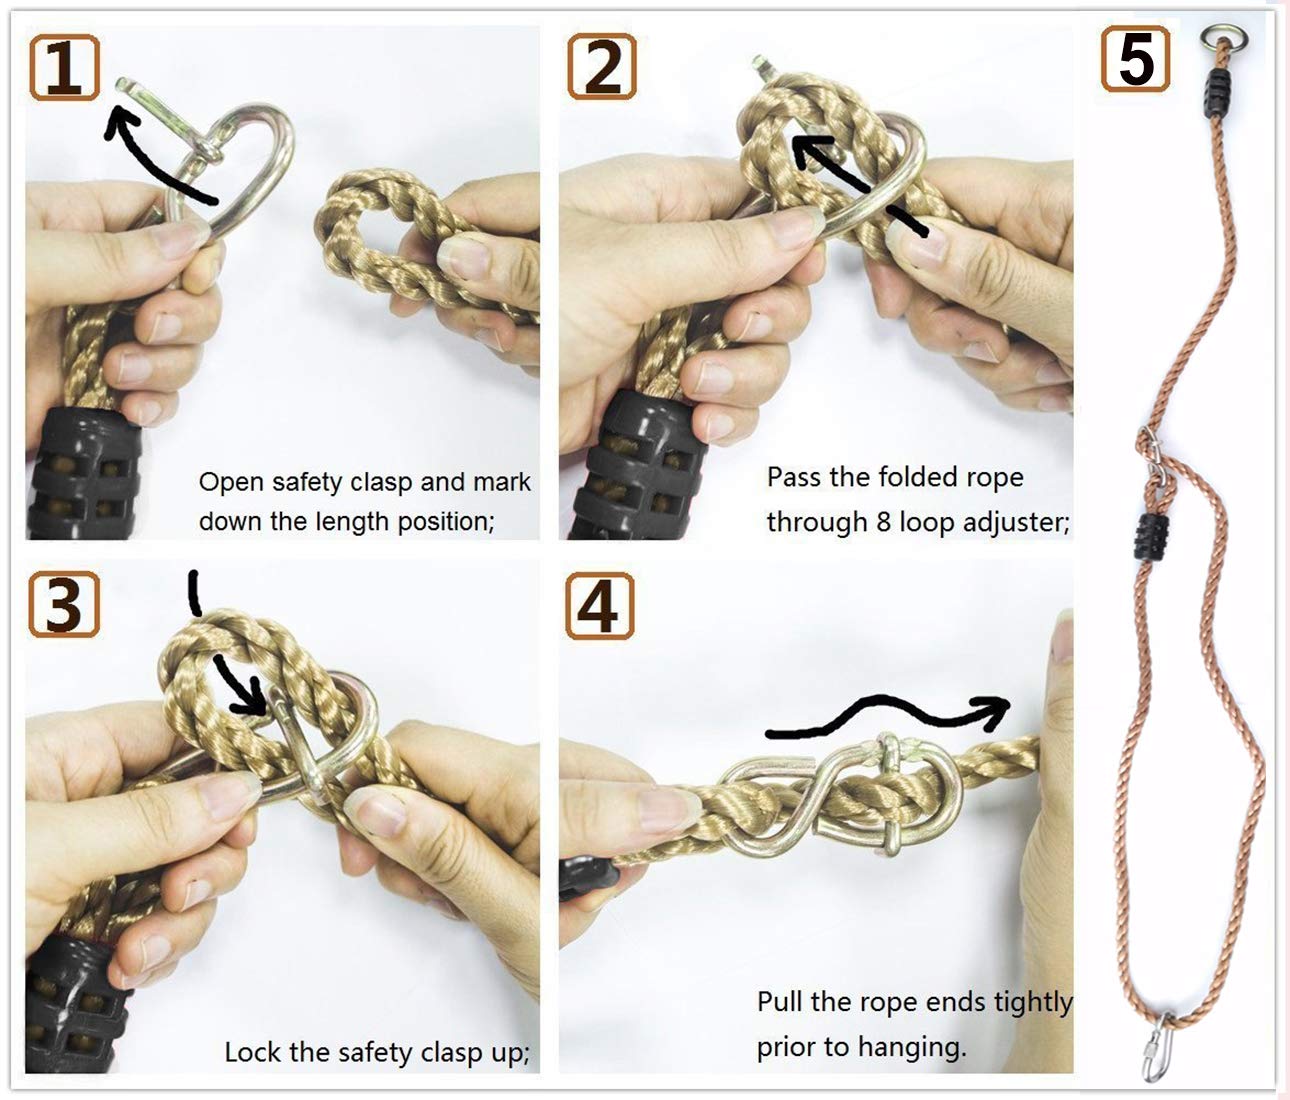 hanger-rope-swing-how-hang-it-guide